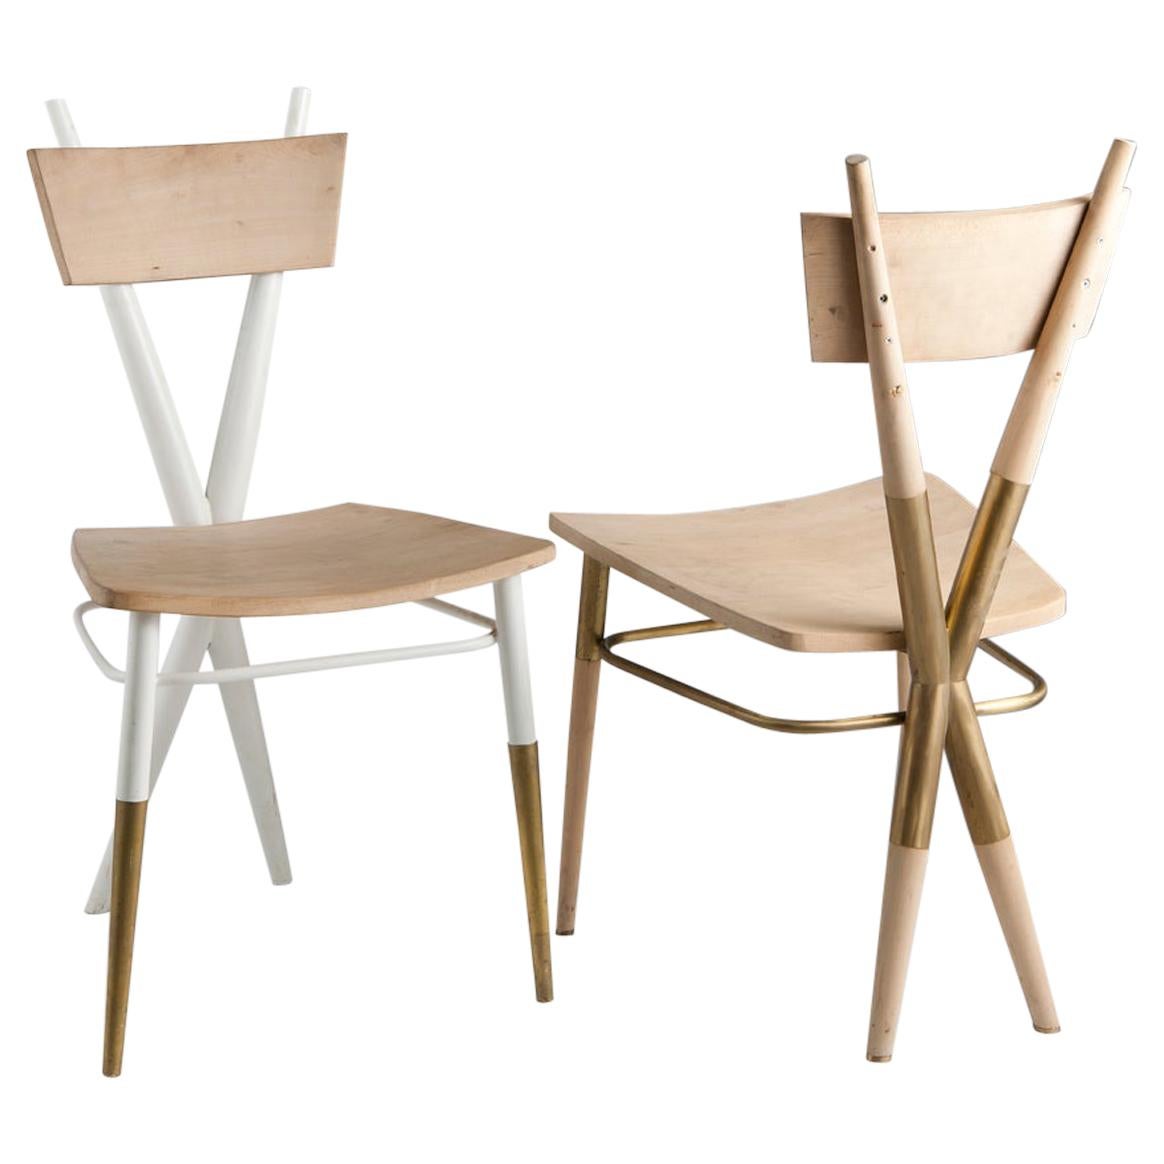 X Set of Wooden Chairs by Sema Topaloglu